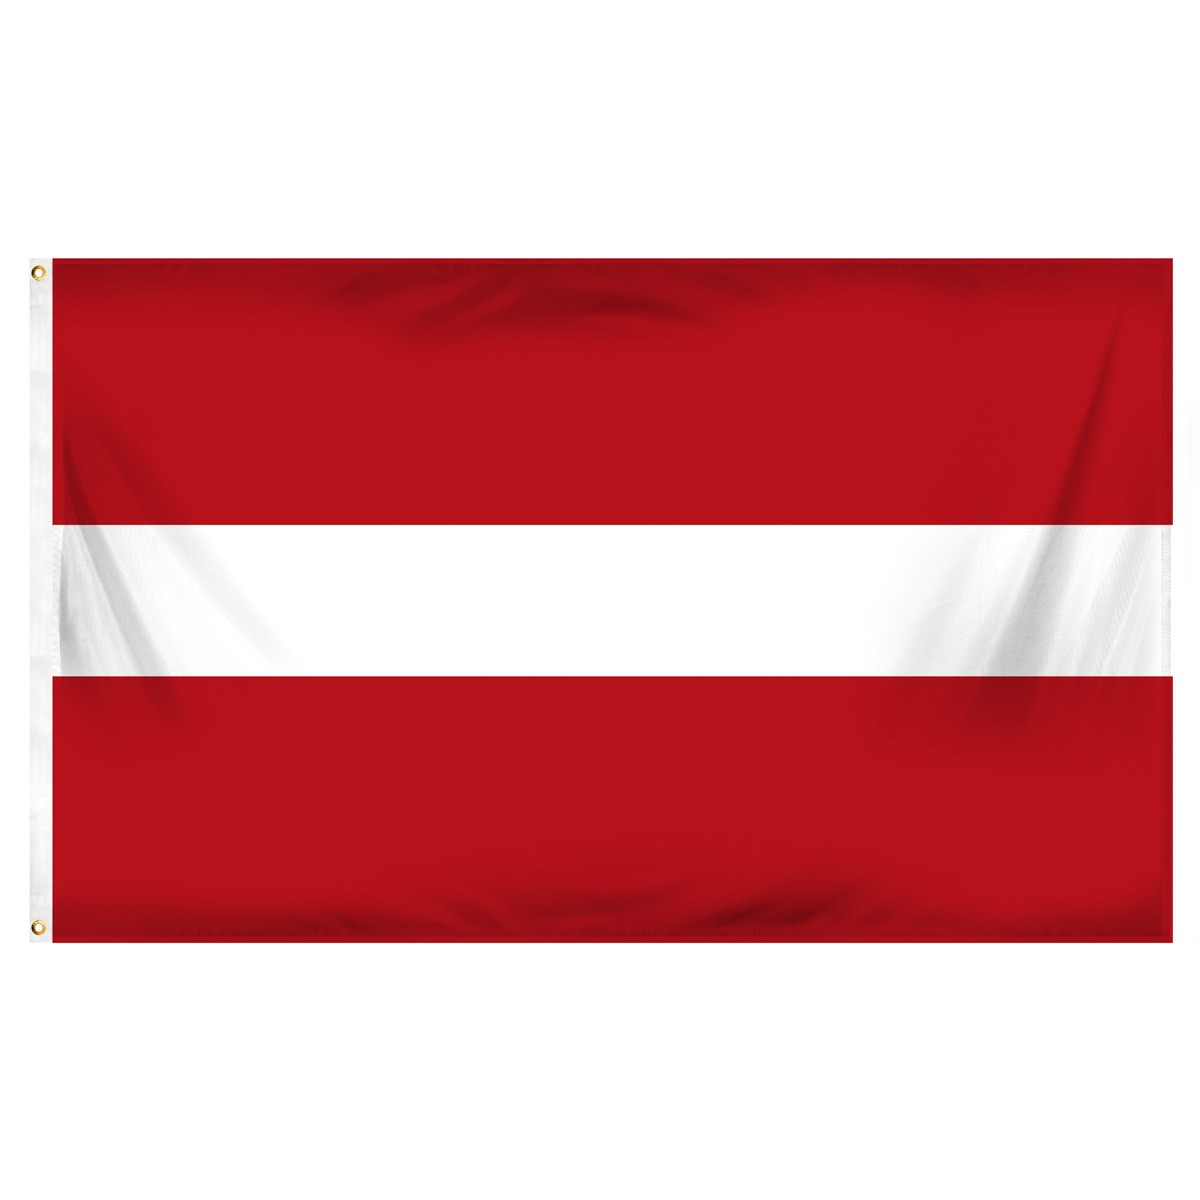 Latvia Horizontal Streamers and Flags